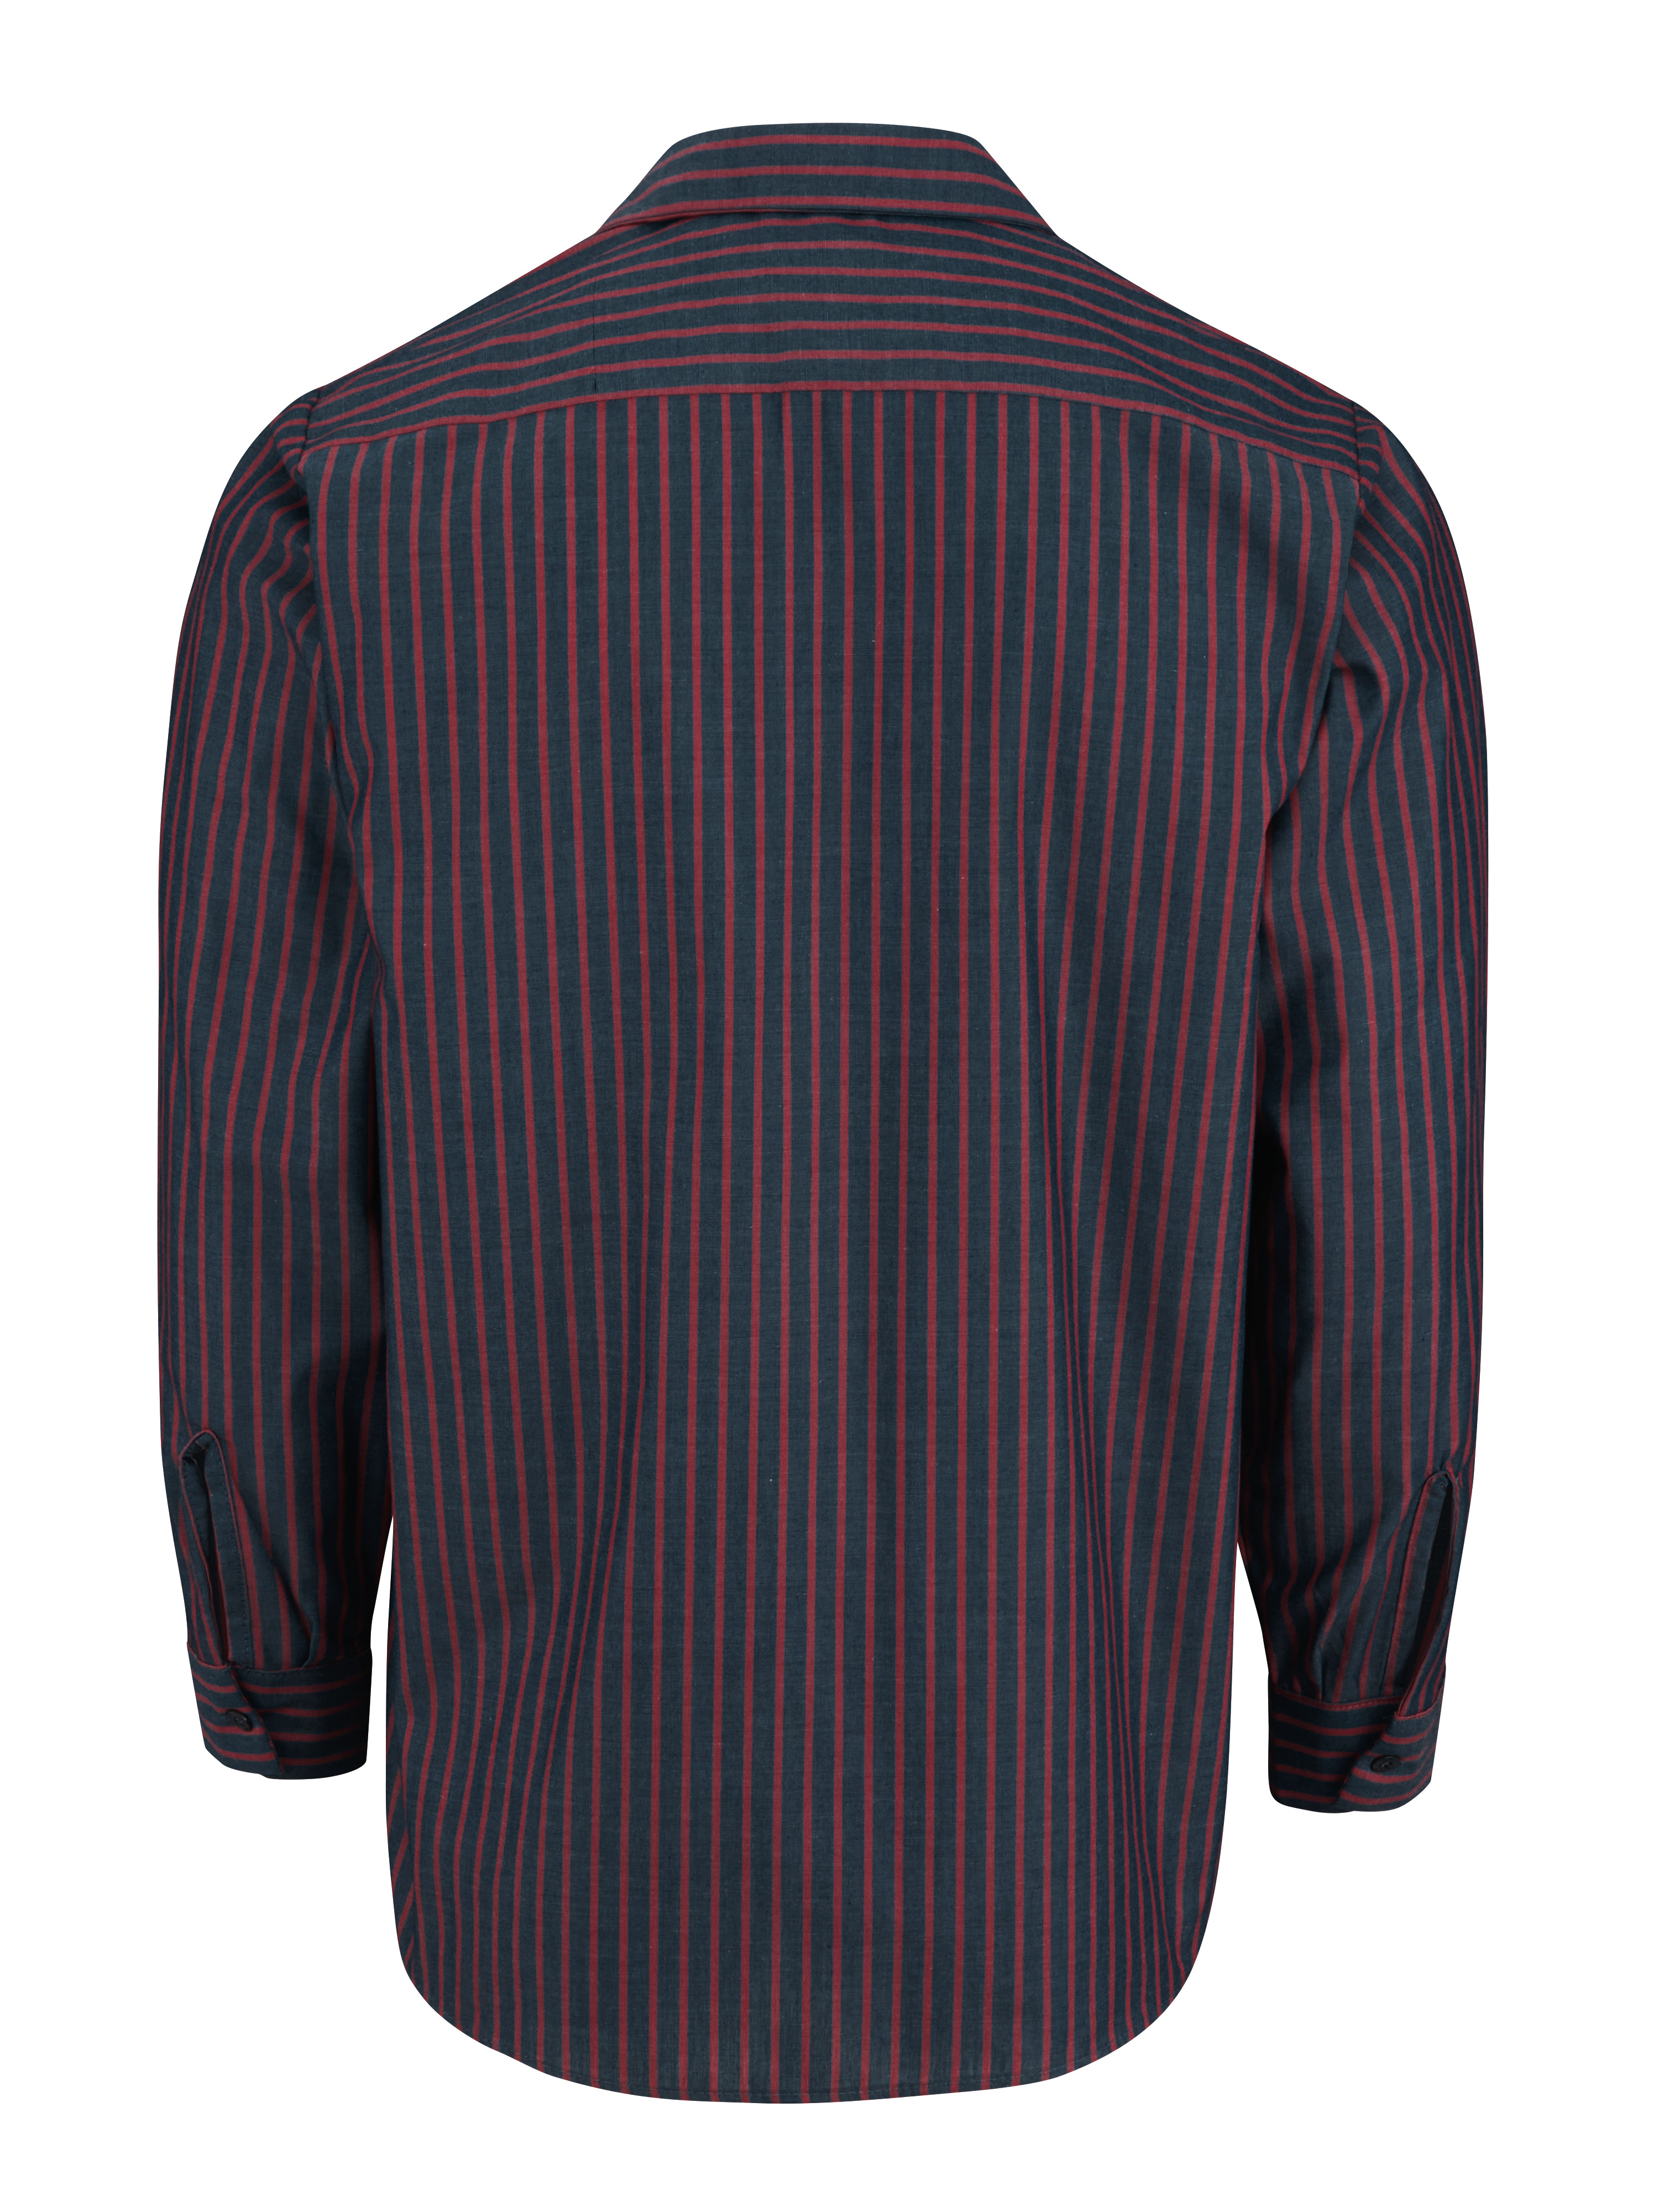 Picture of Red Kap® SP14-STRIPE Men's Long Sleeve Industrial Stripe Work Shirt